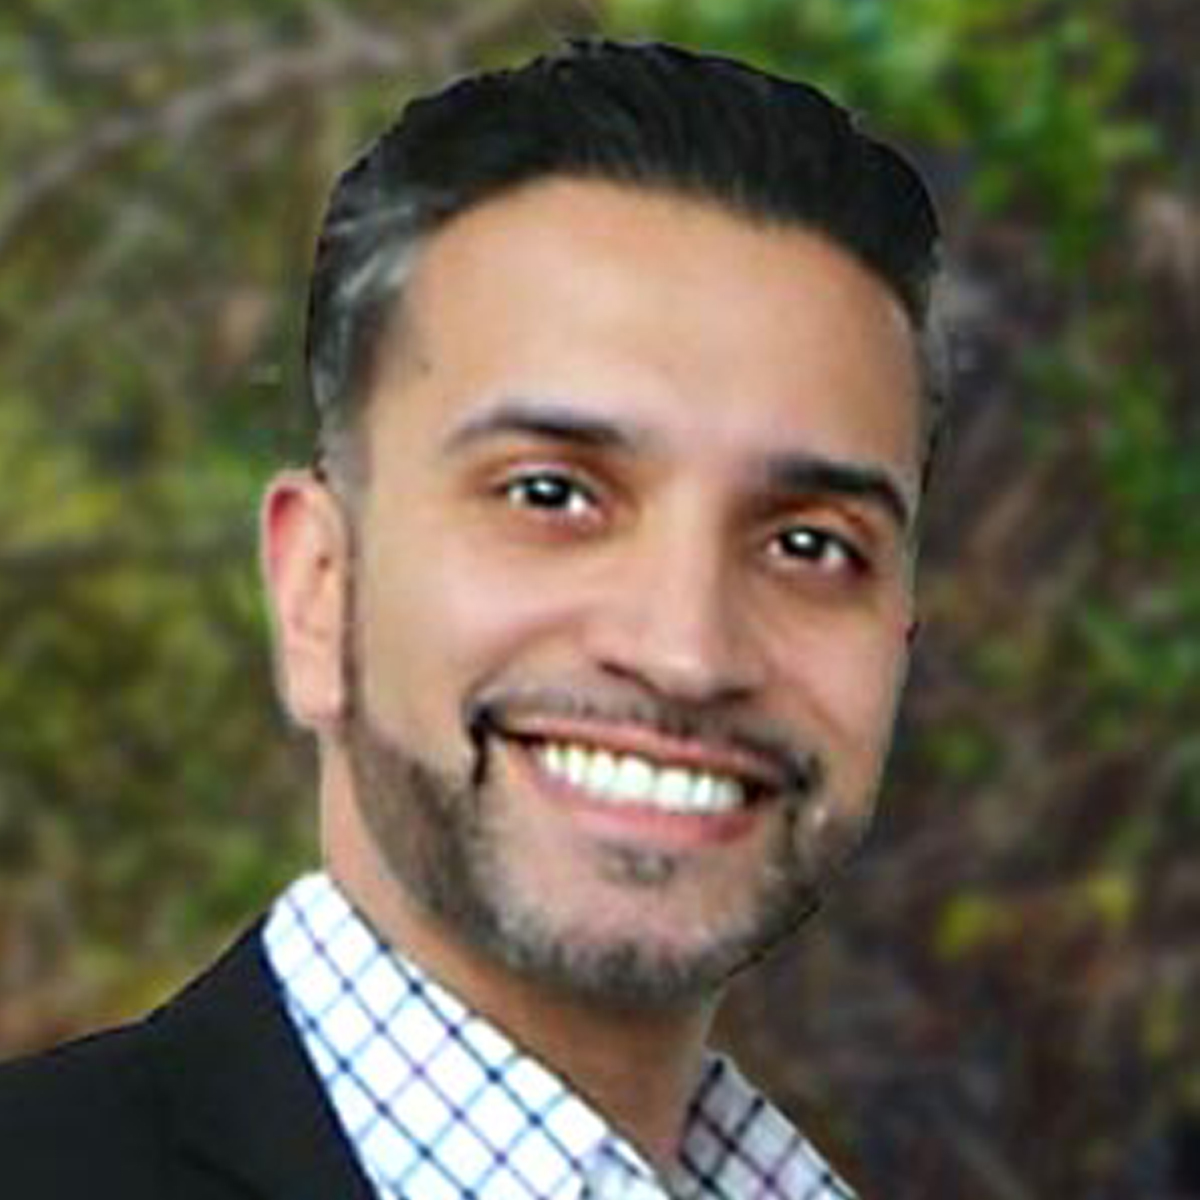 A friendly headshot of Omar Tanvir Khan, MD